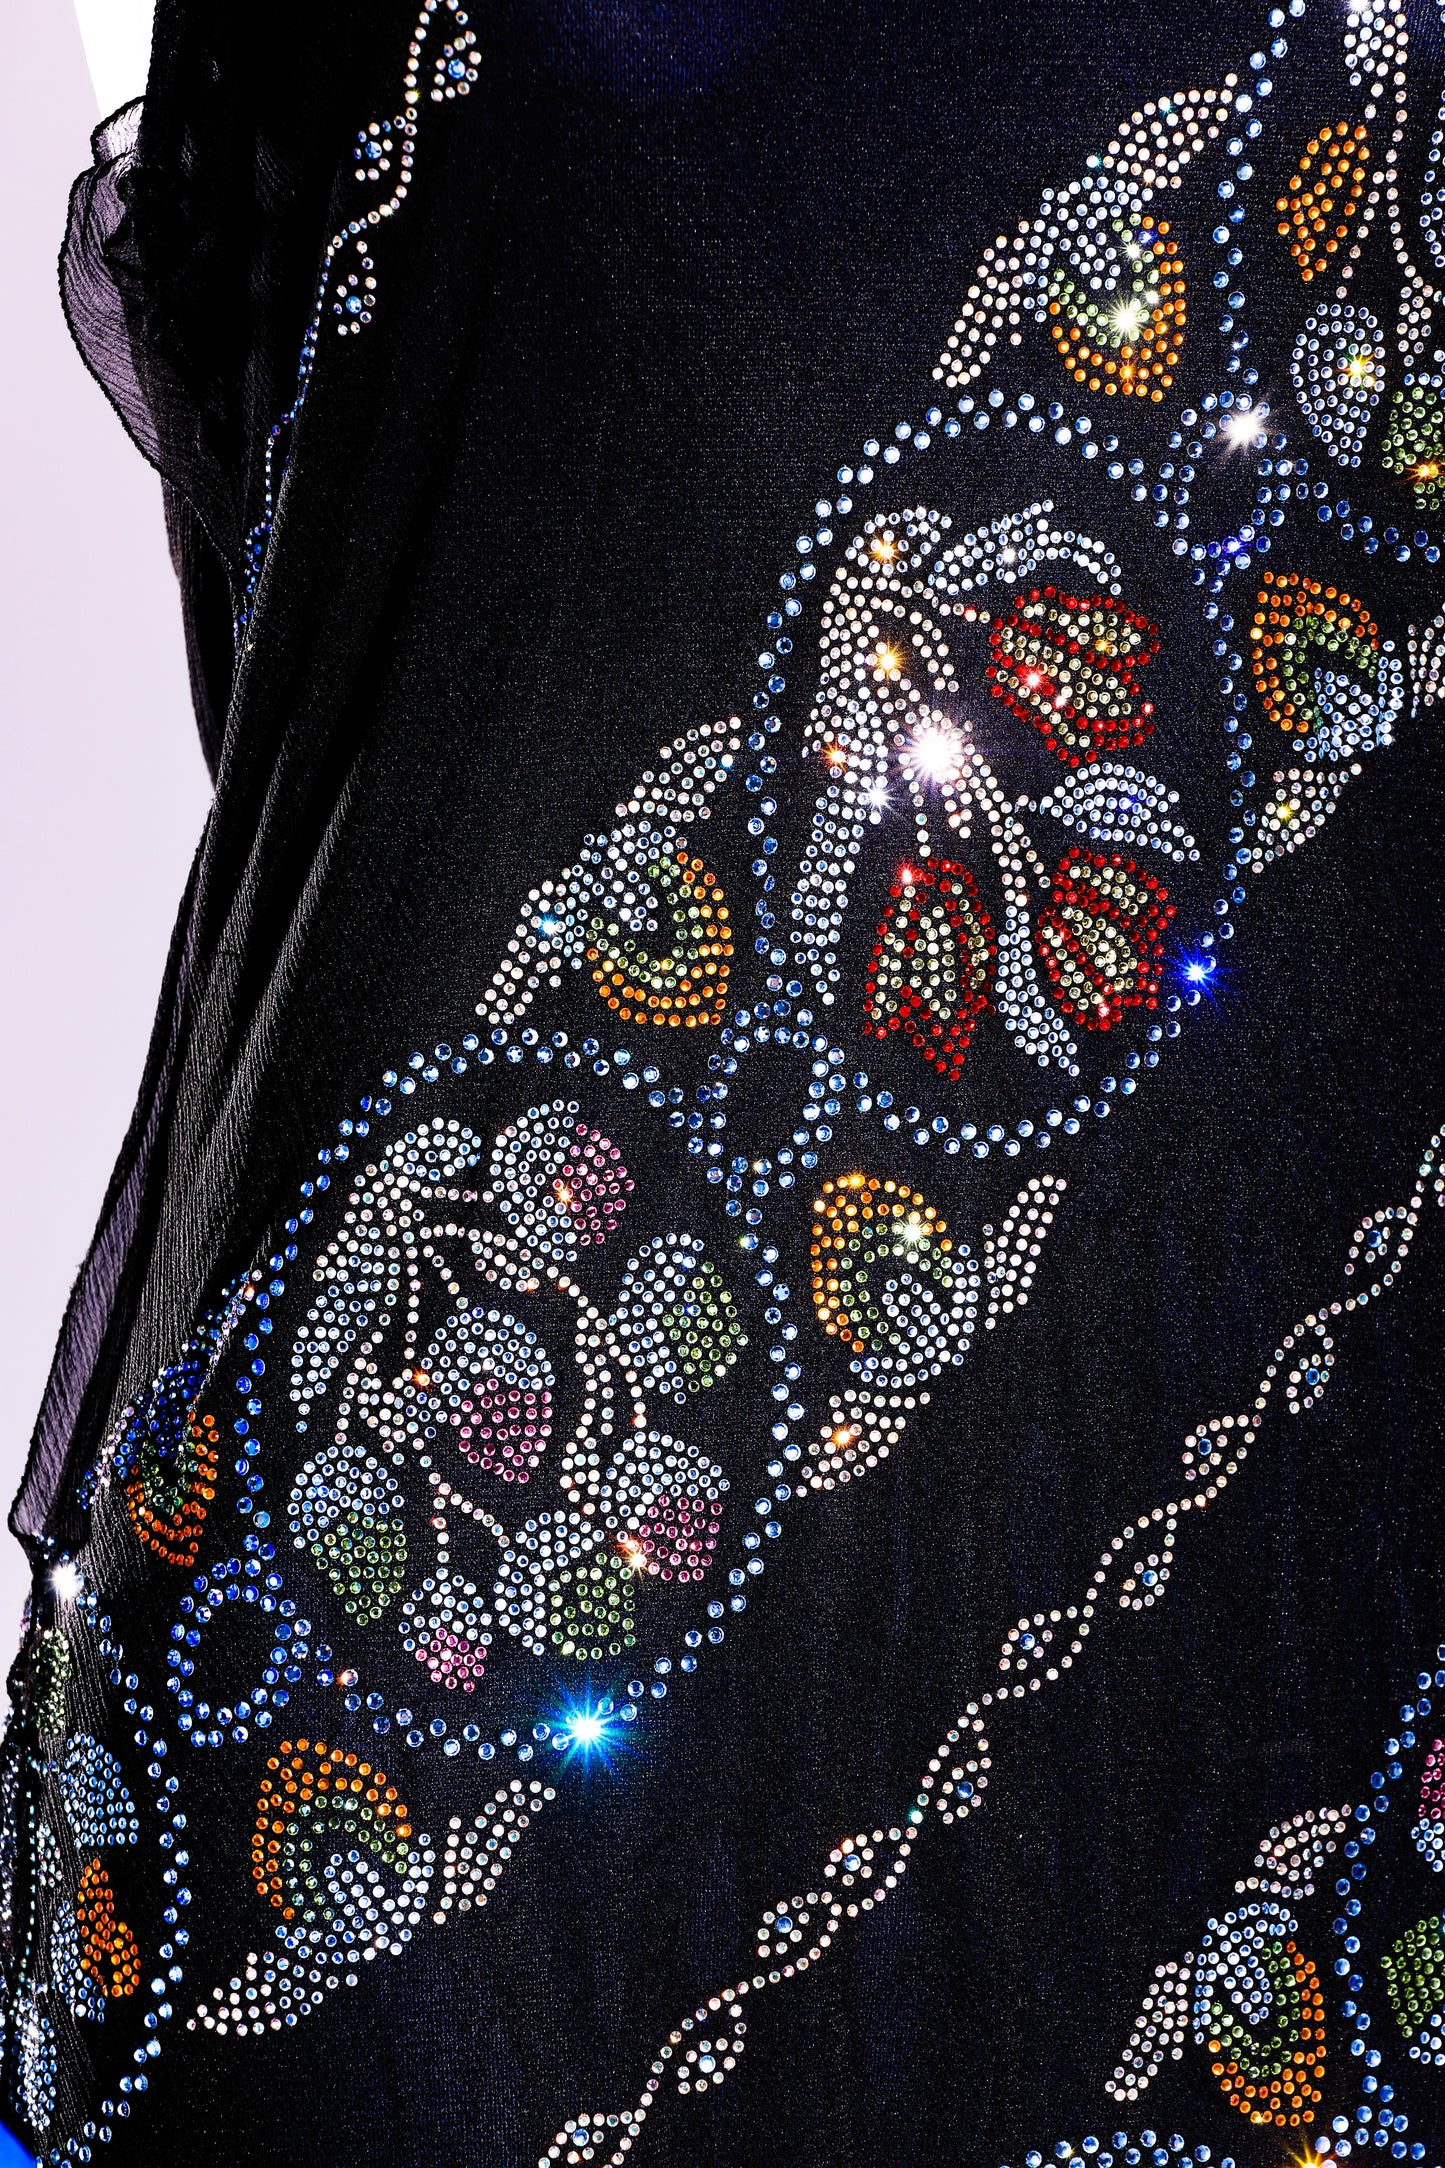 Fendi 90s dress in black chiffon with colored rhinestone applications